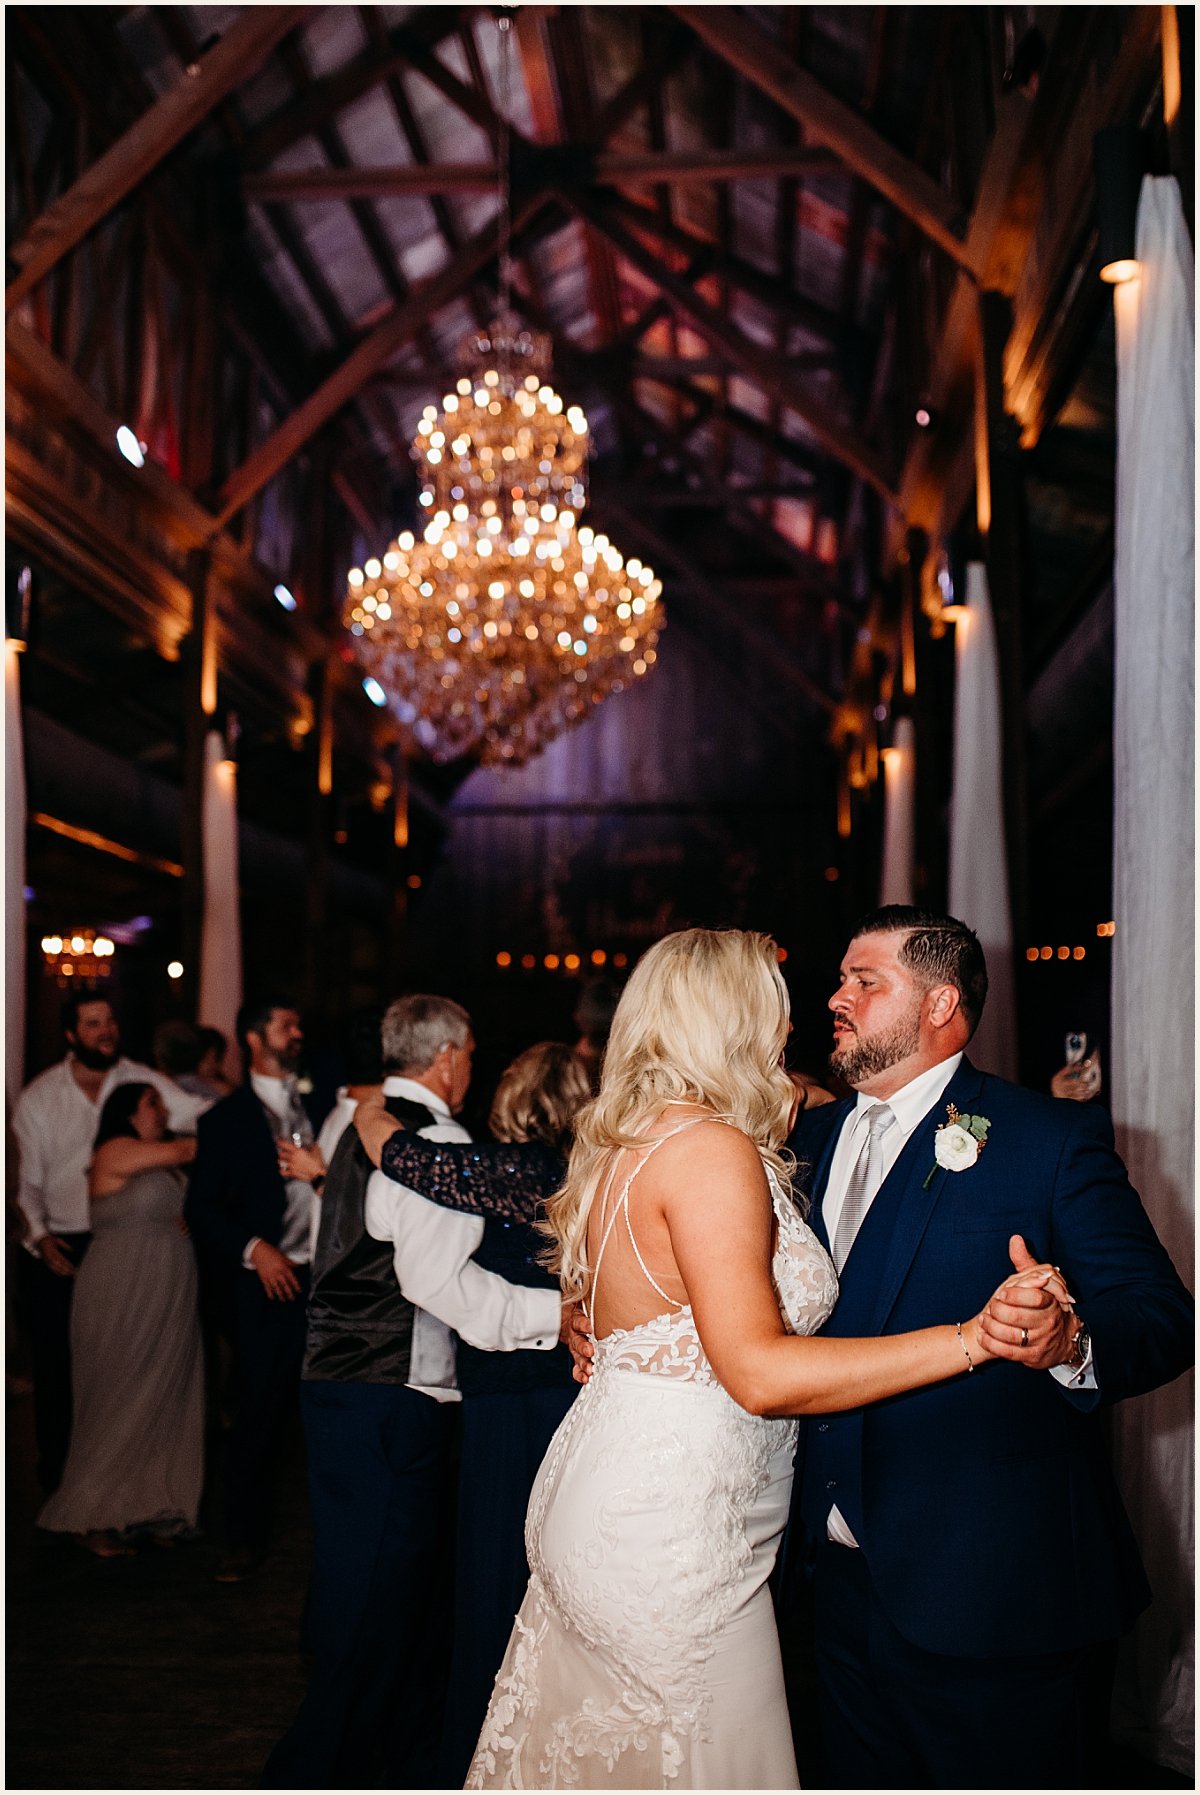 Bride and groom dance the night away at the wedding reception | Lauren Crumpler Photography | Texas Wedding Photographer